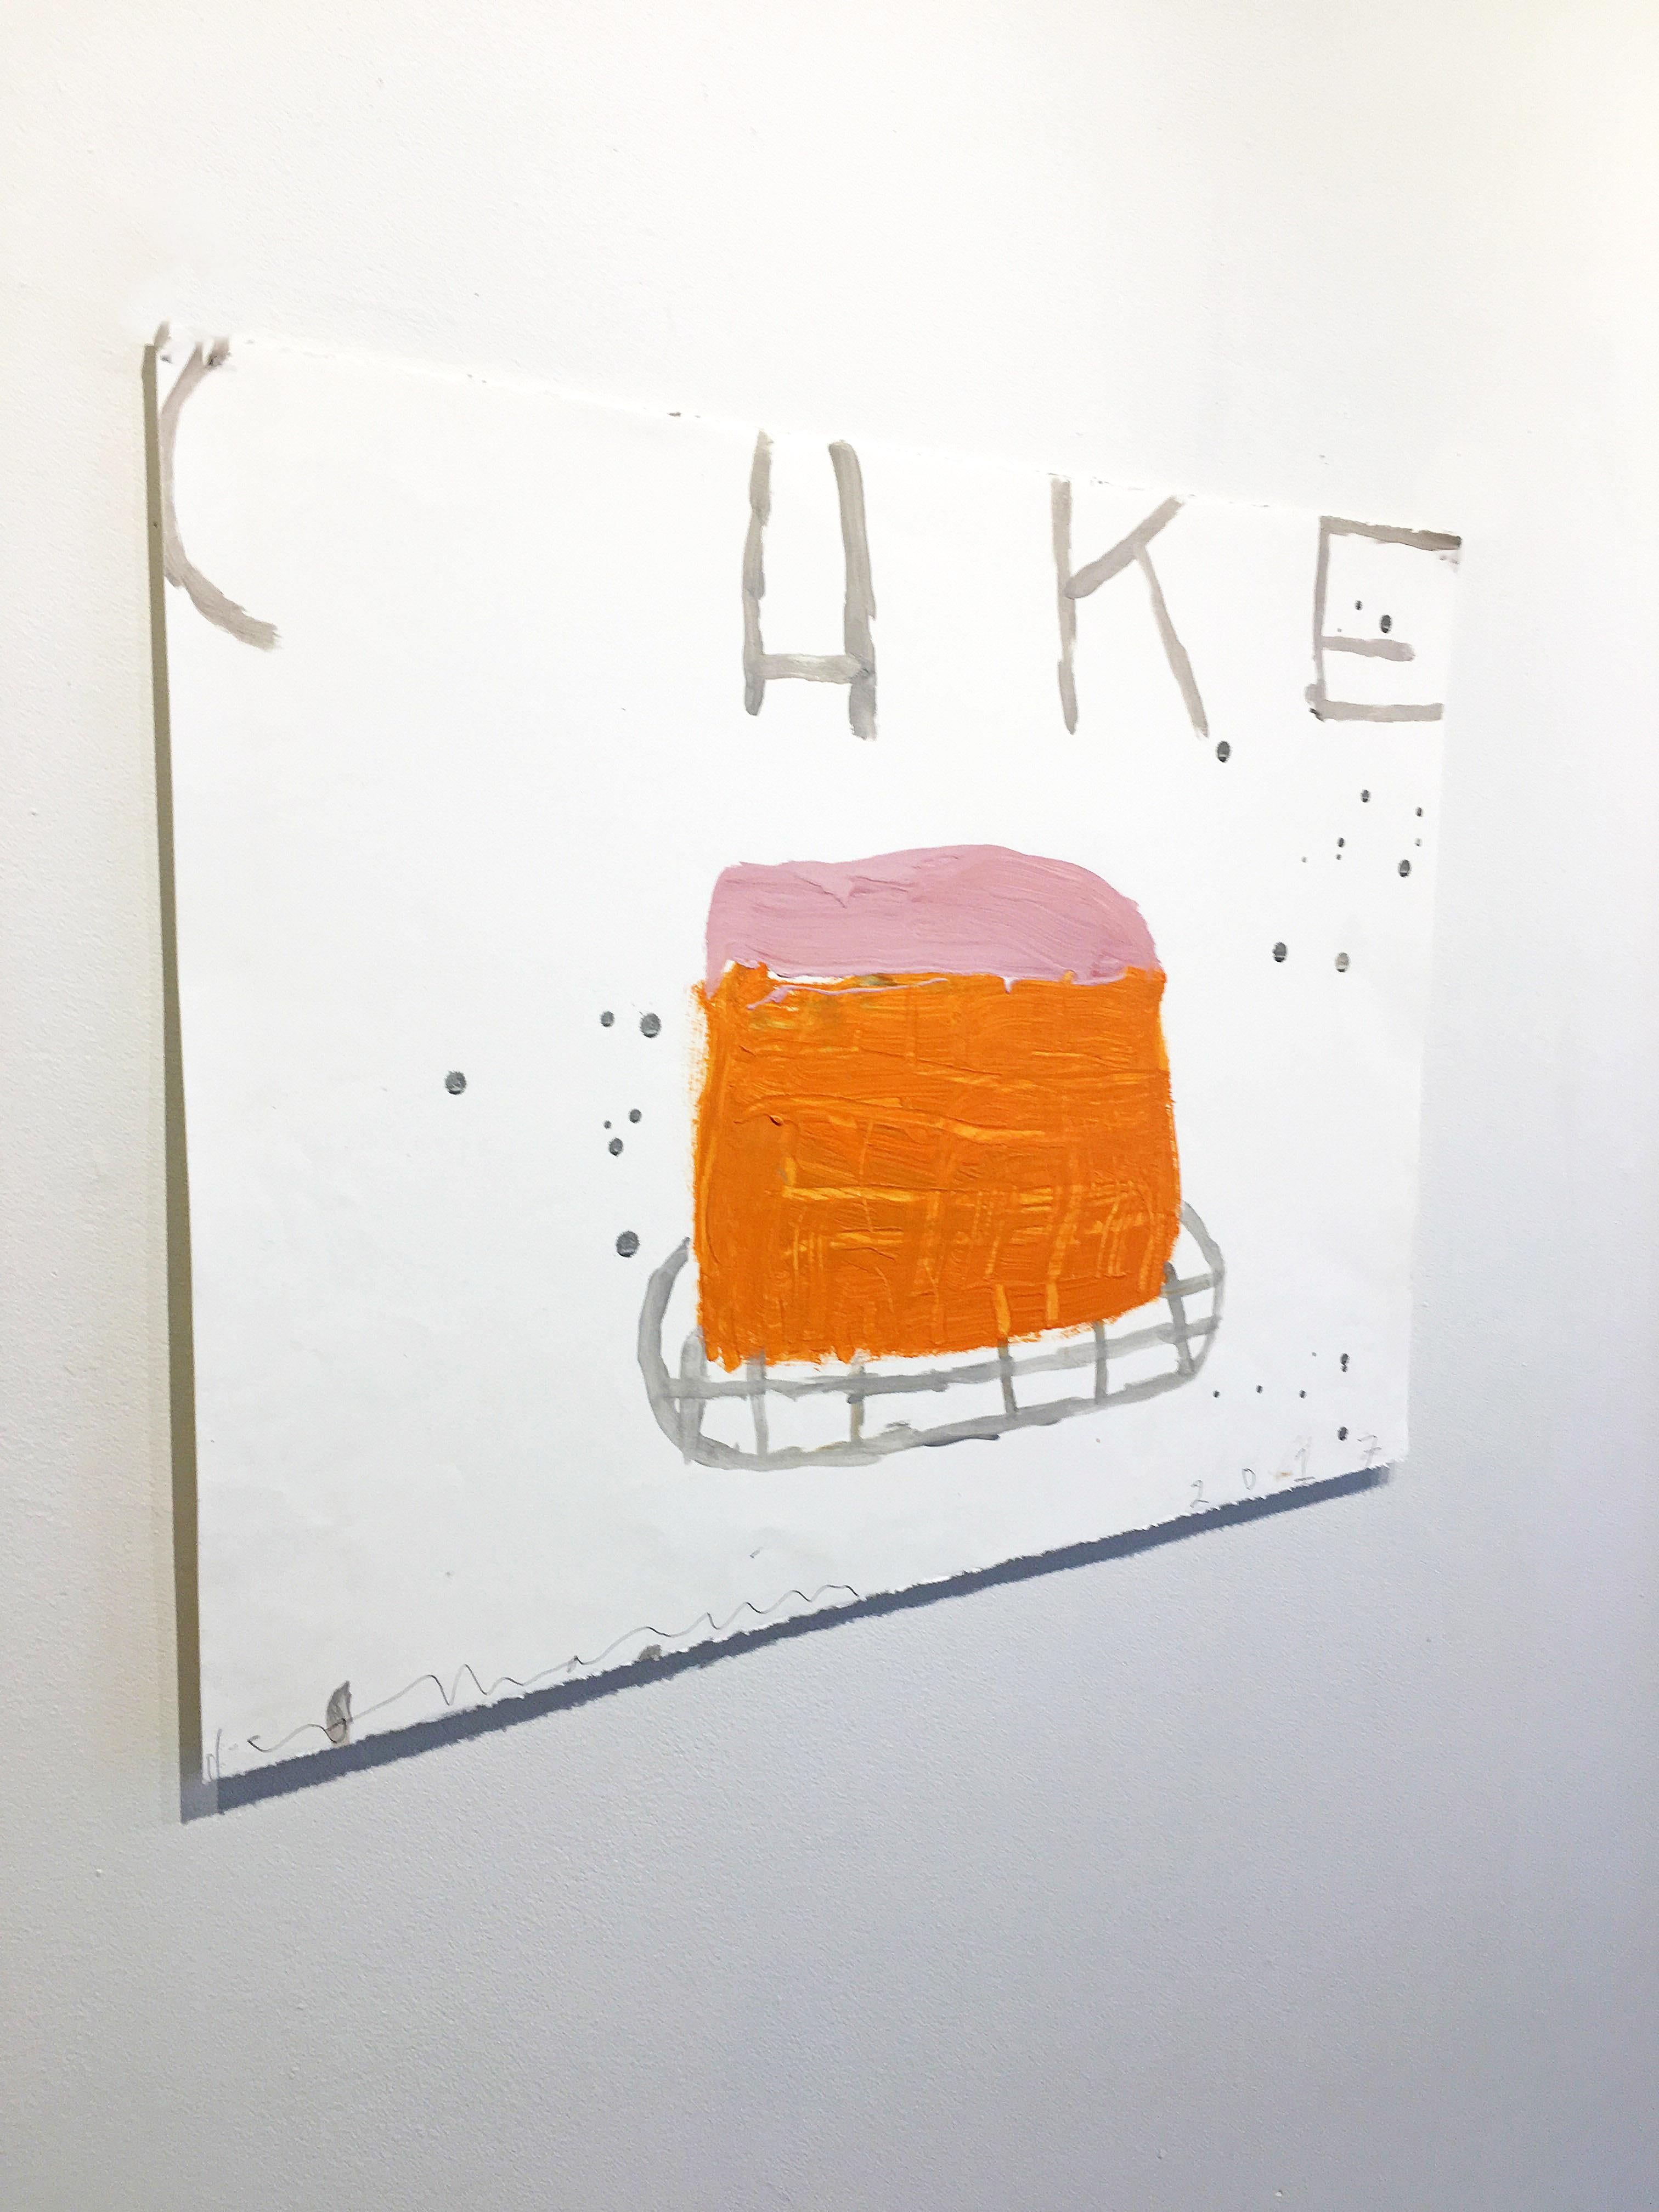 Cake (Orange and Chocolate on Creme) - Contemporary Mixed Media Art by Gary Komarin